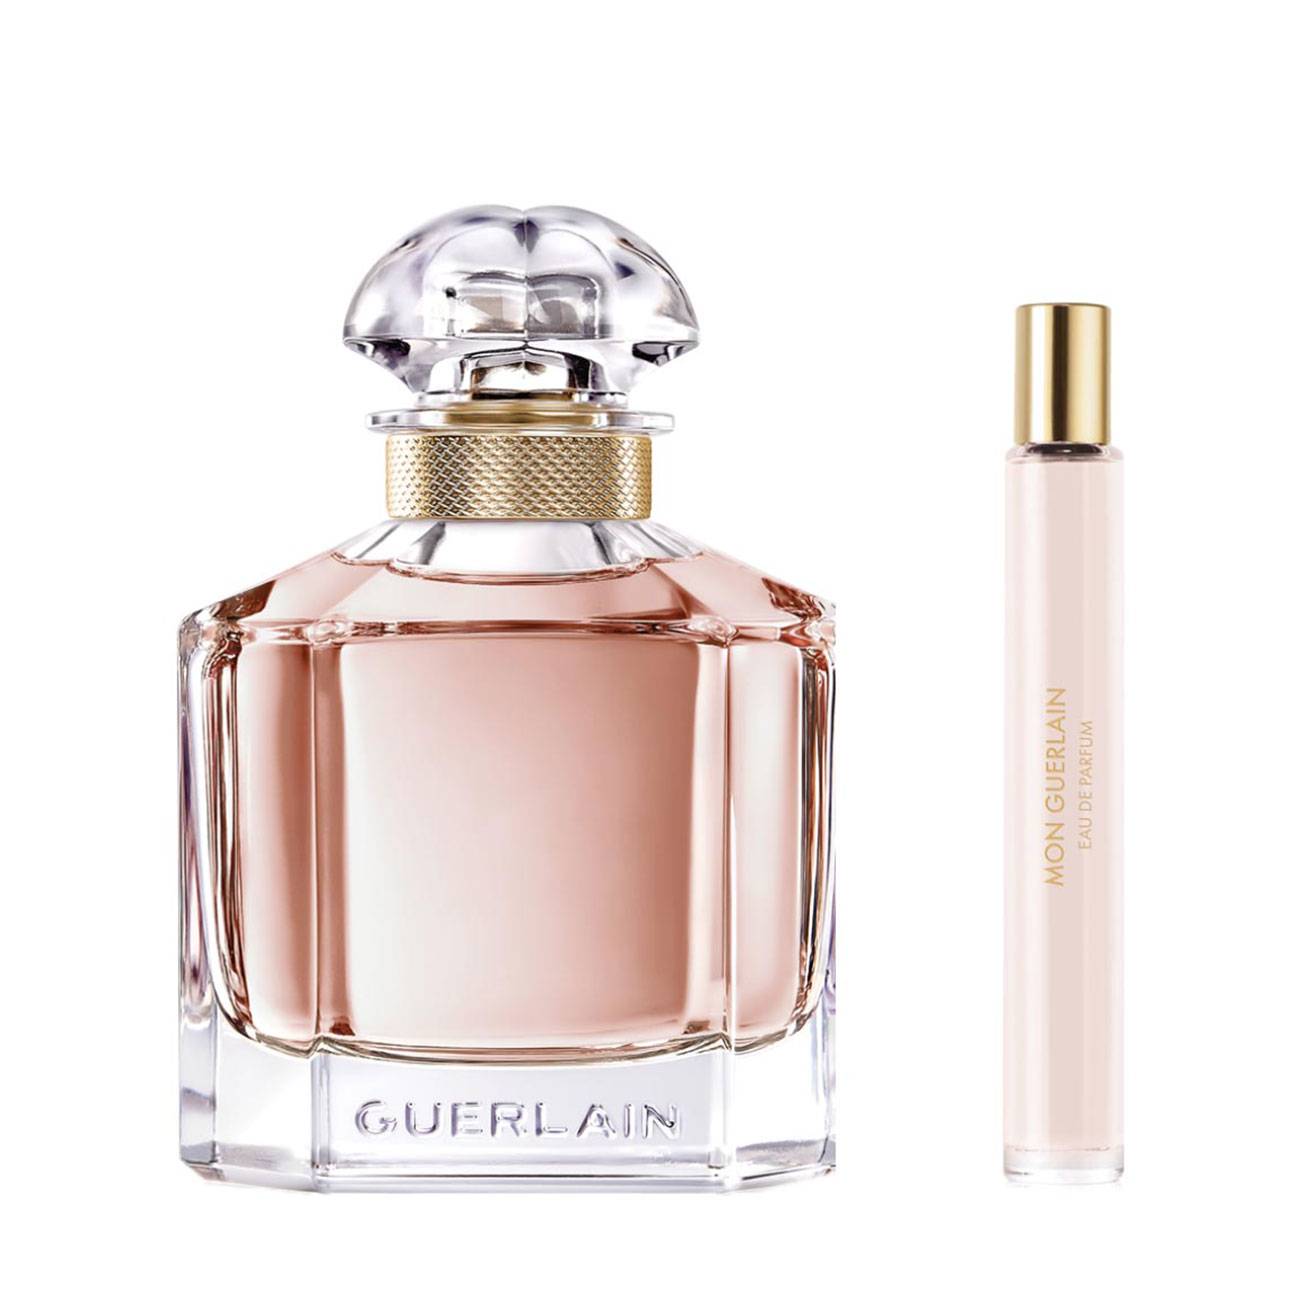 Set parfumuri Guerlain MON GUERLAIN SET 110ml cu comanda online